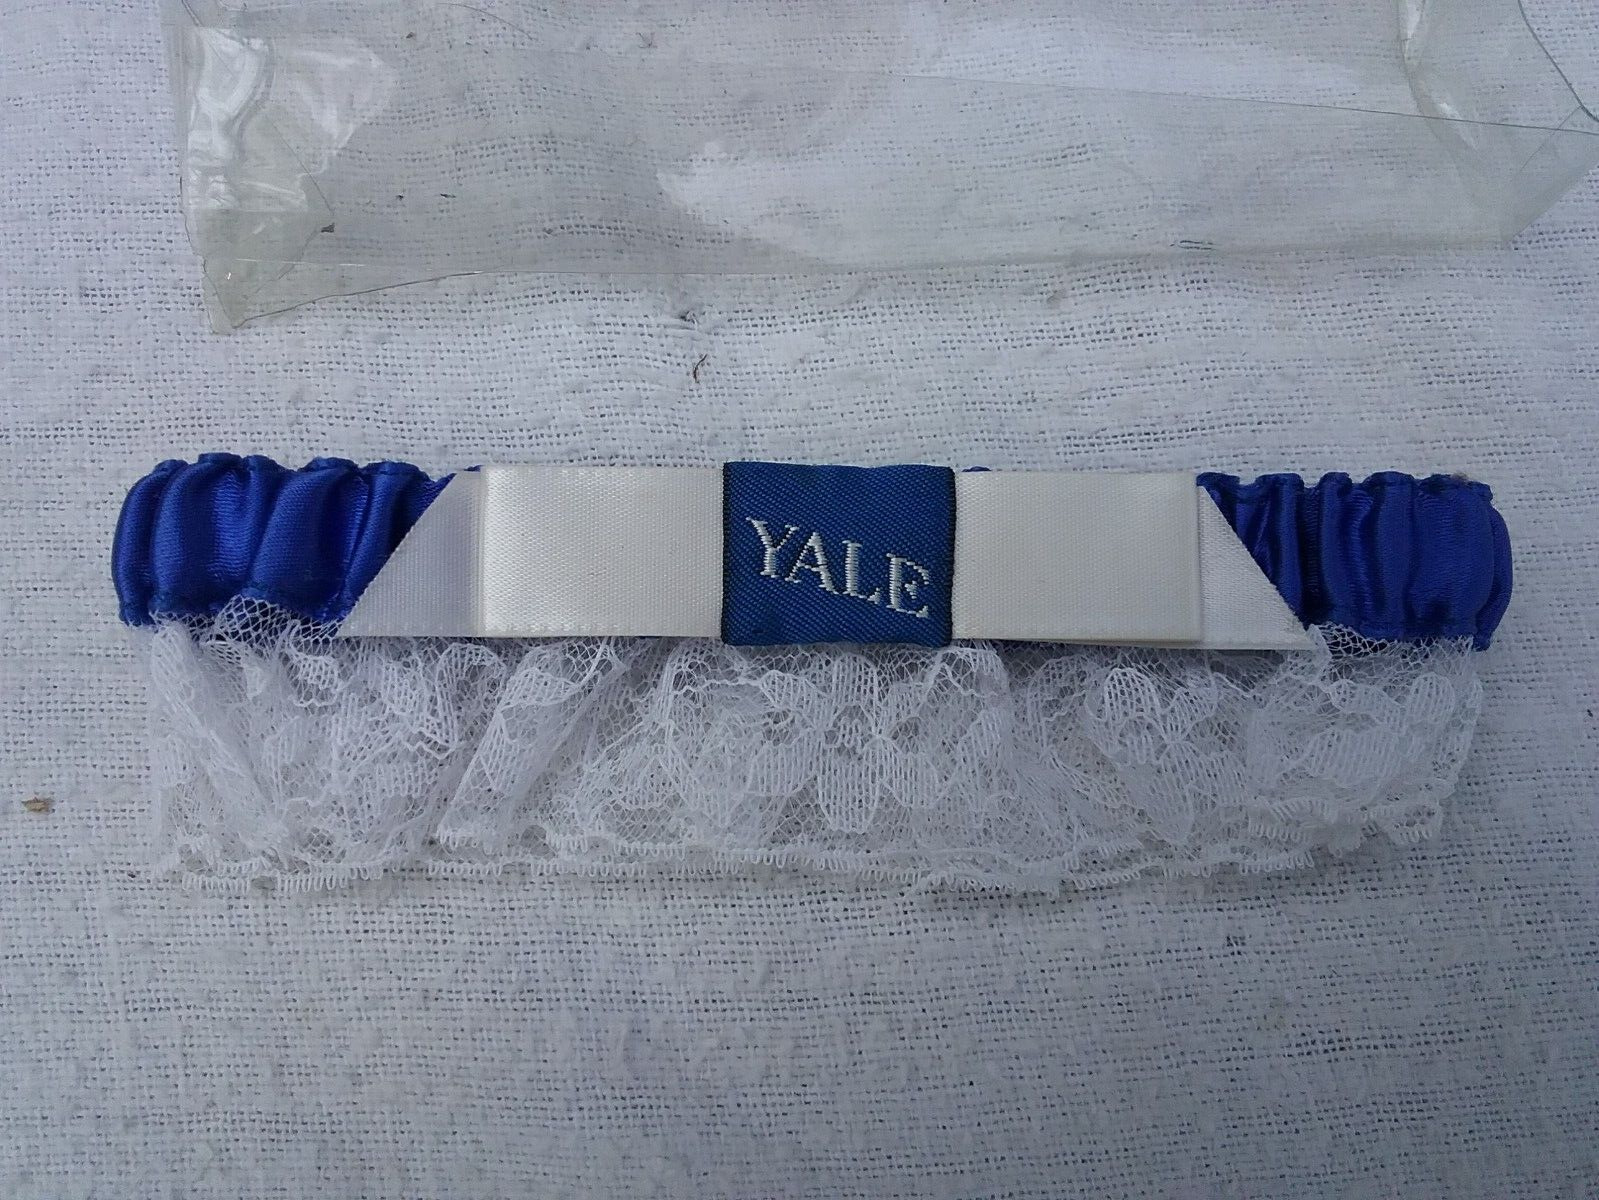 LOWER PRICE Vintage Yale University Garter VGC includes original box.